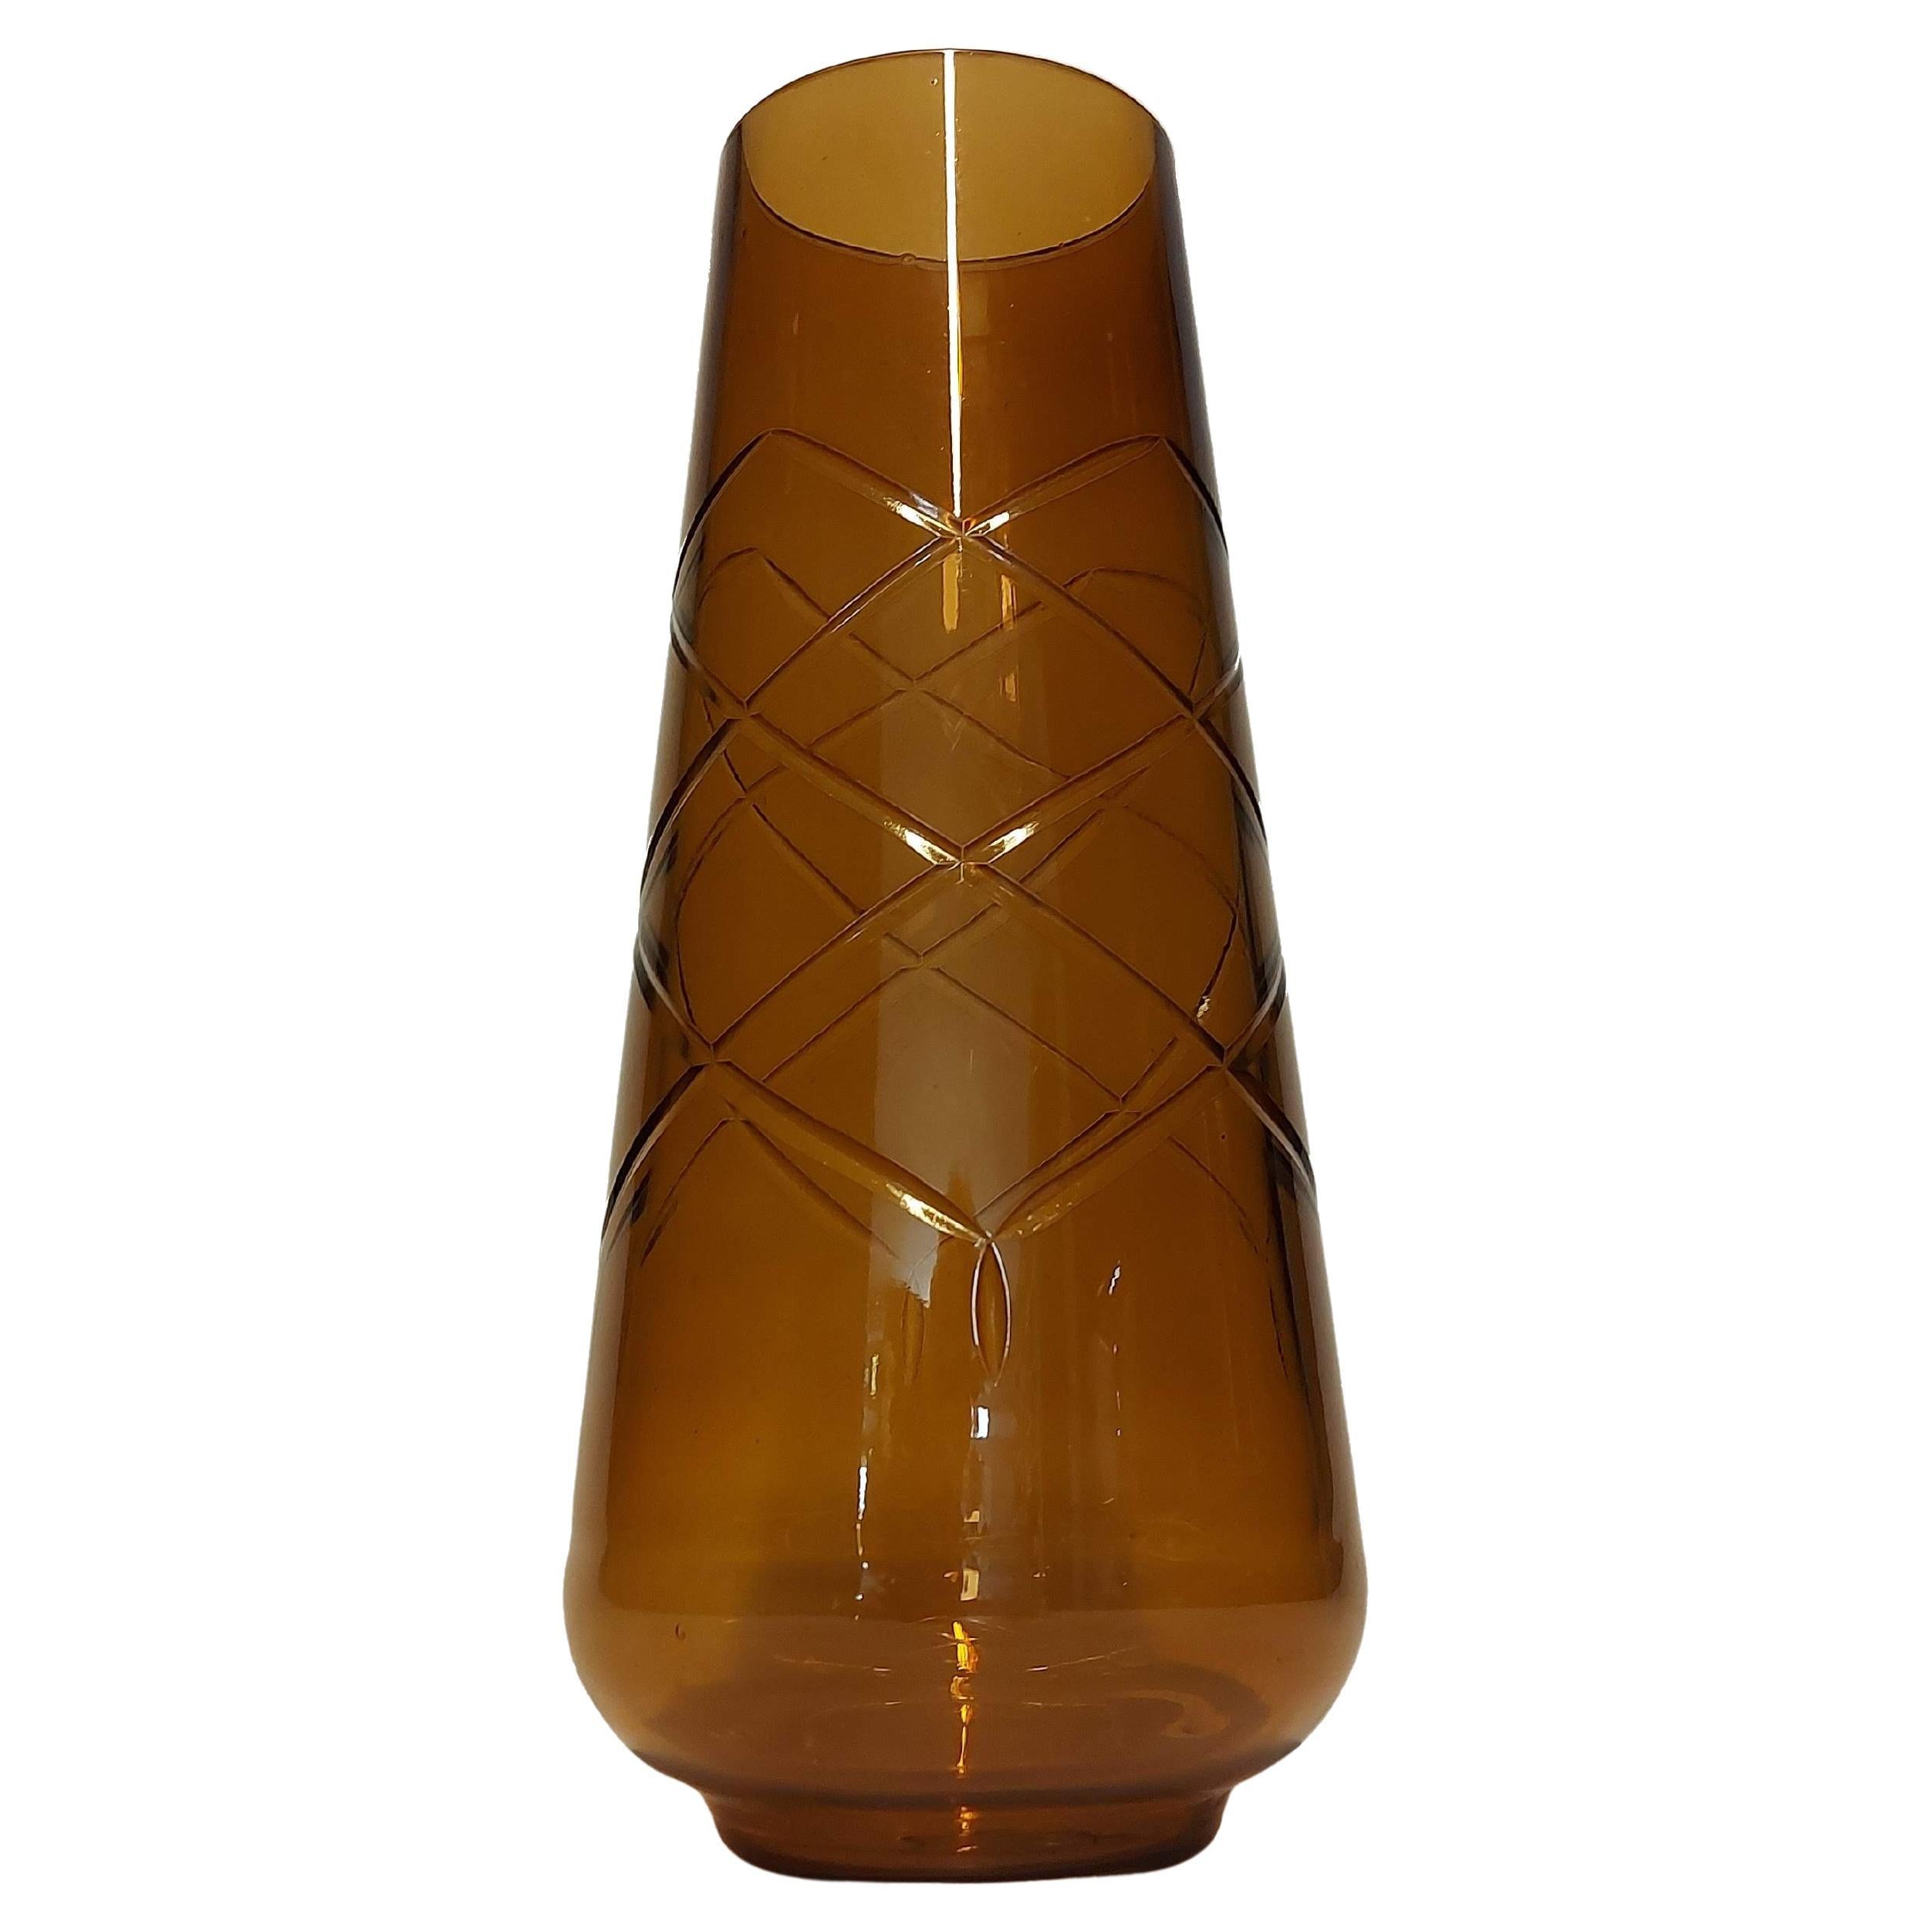 2K1M Girata, Murano Glass Vases - Moka Colour - Made on the Island of Murano For Sale